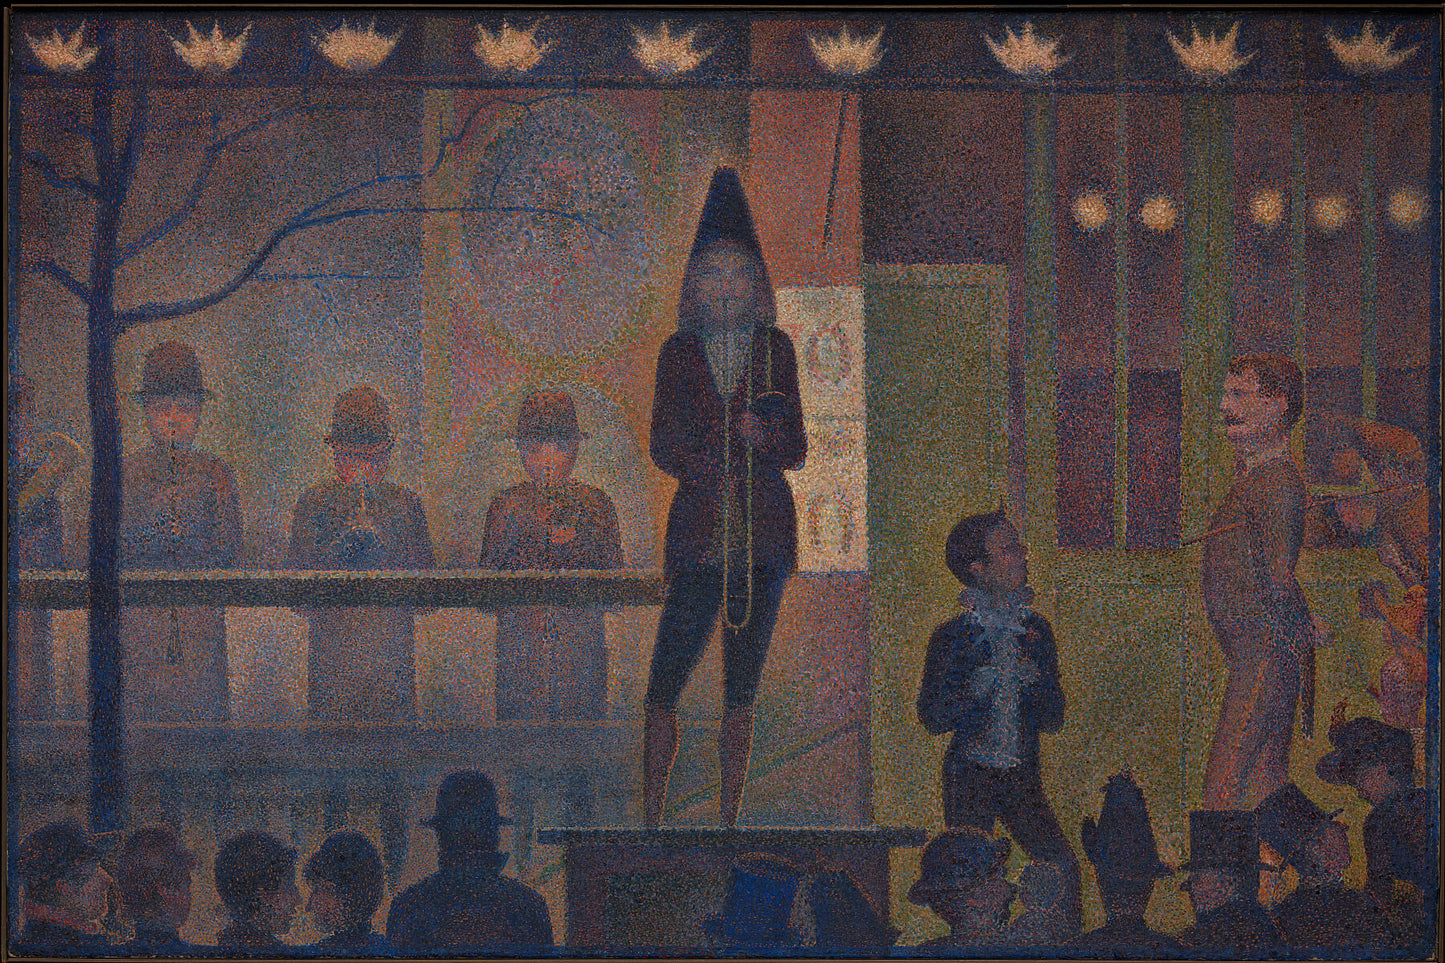 Circus Sideshow (Parade de cirque), 1887–88 by Georges Seurat.